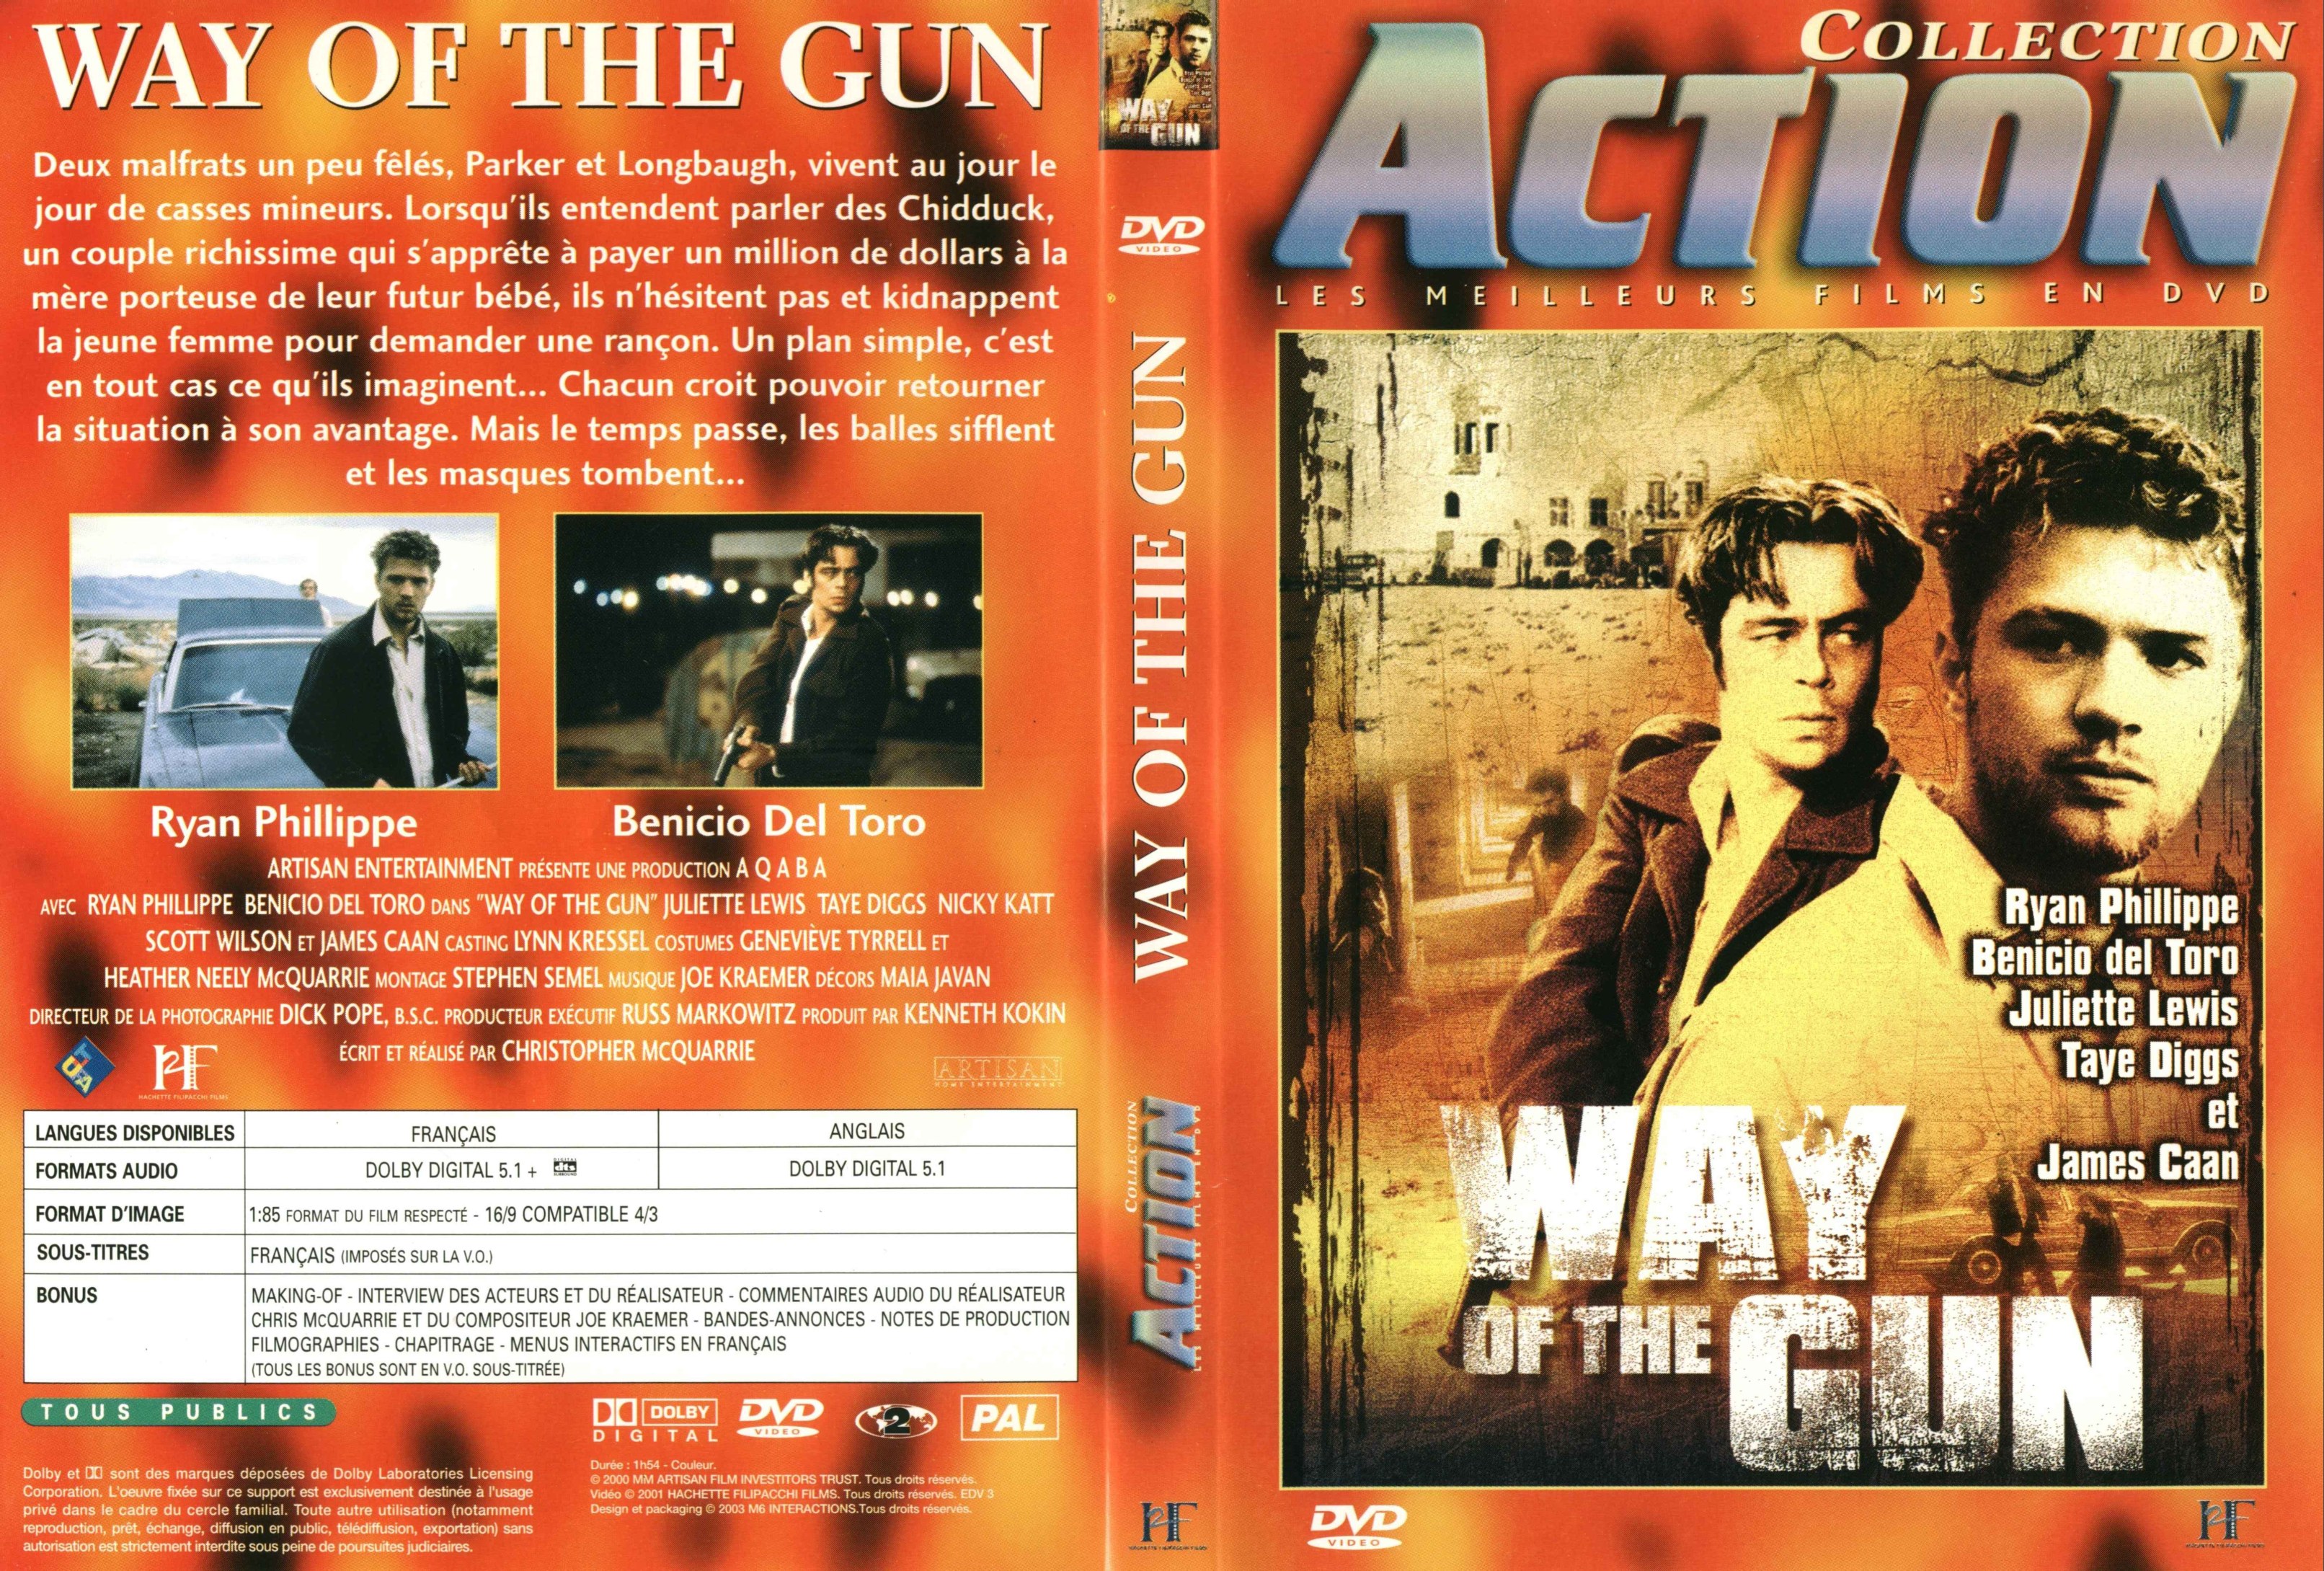 Jaquette DVD Way of the gun